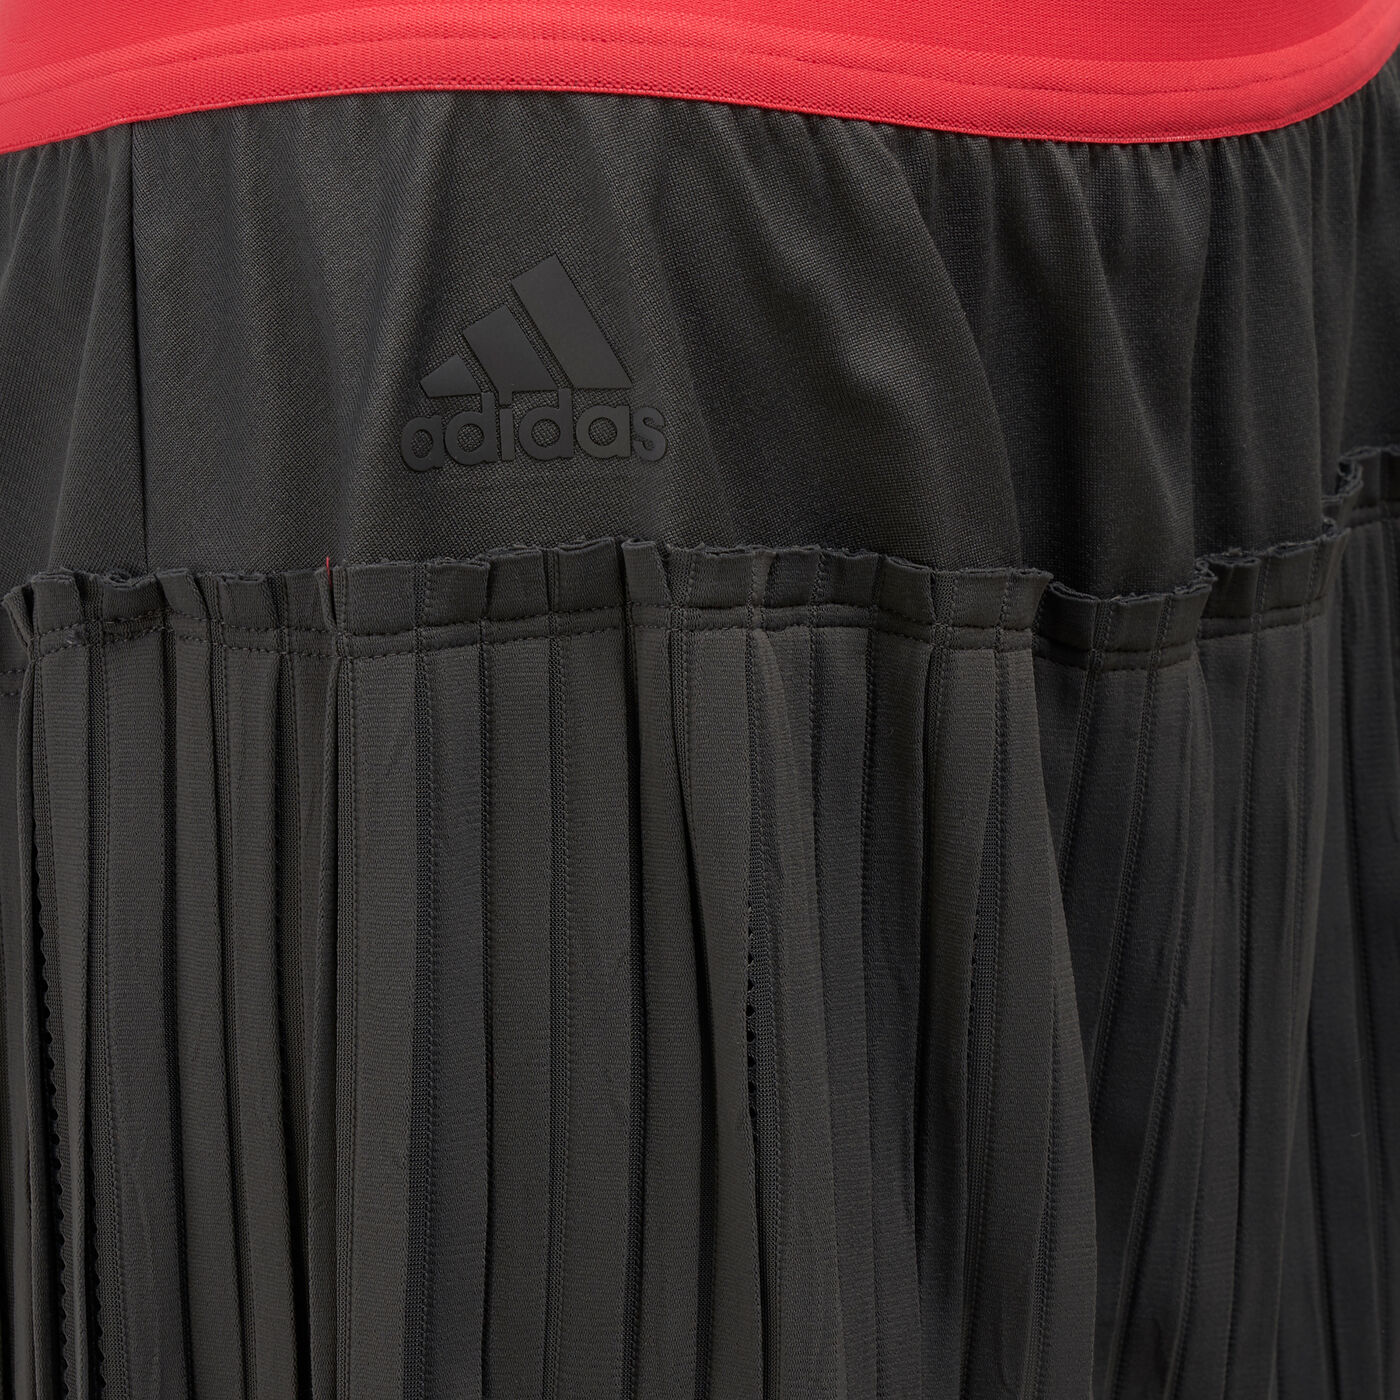 Women's Fada Matchcode 13-Inch Skirt